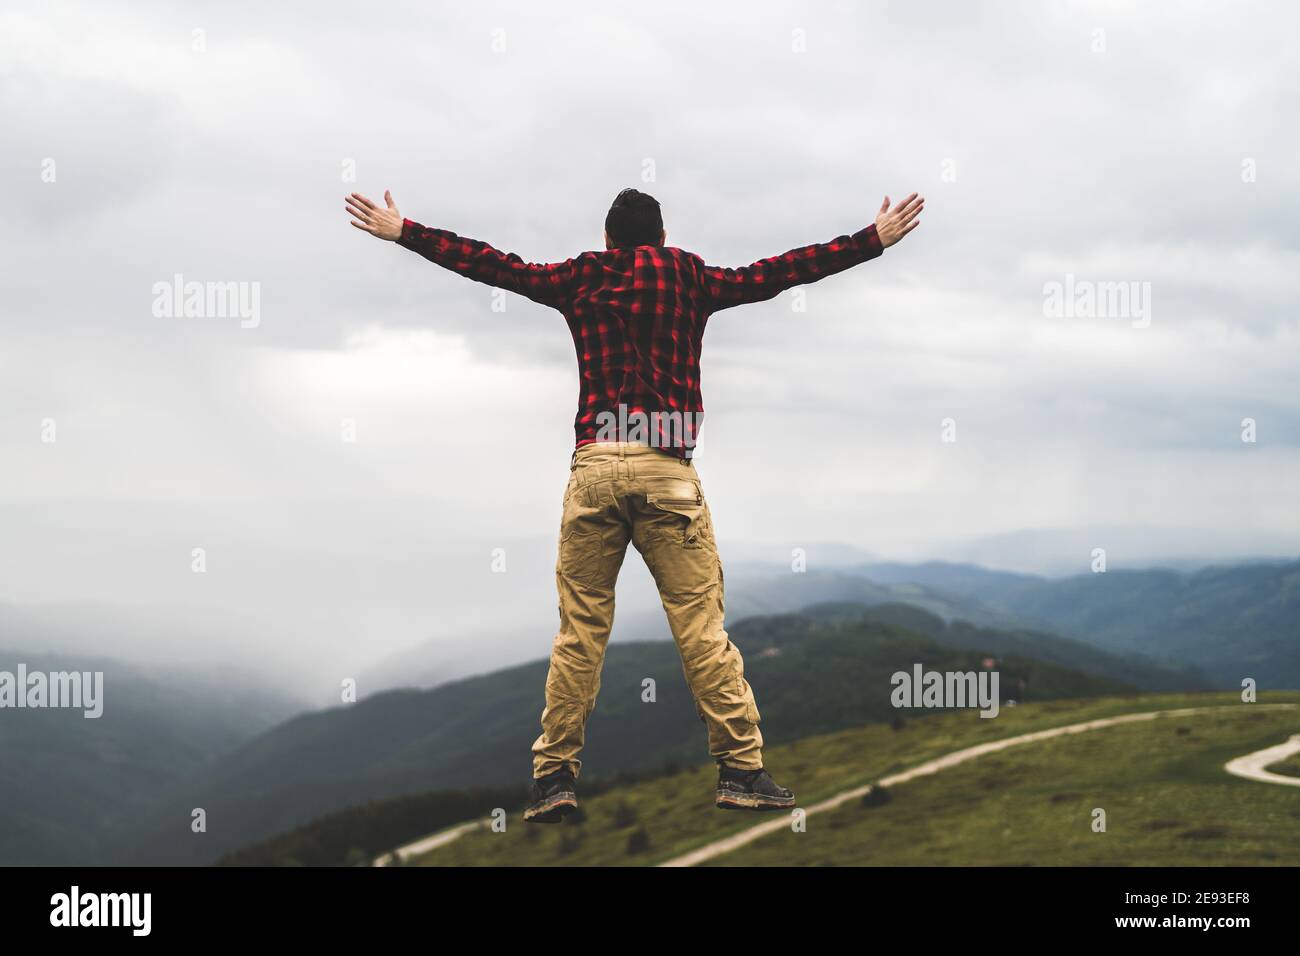 Carefree jump in mountain peak Stock Photo